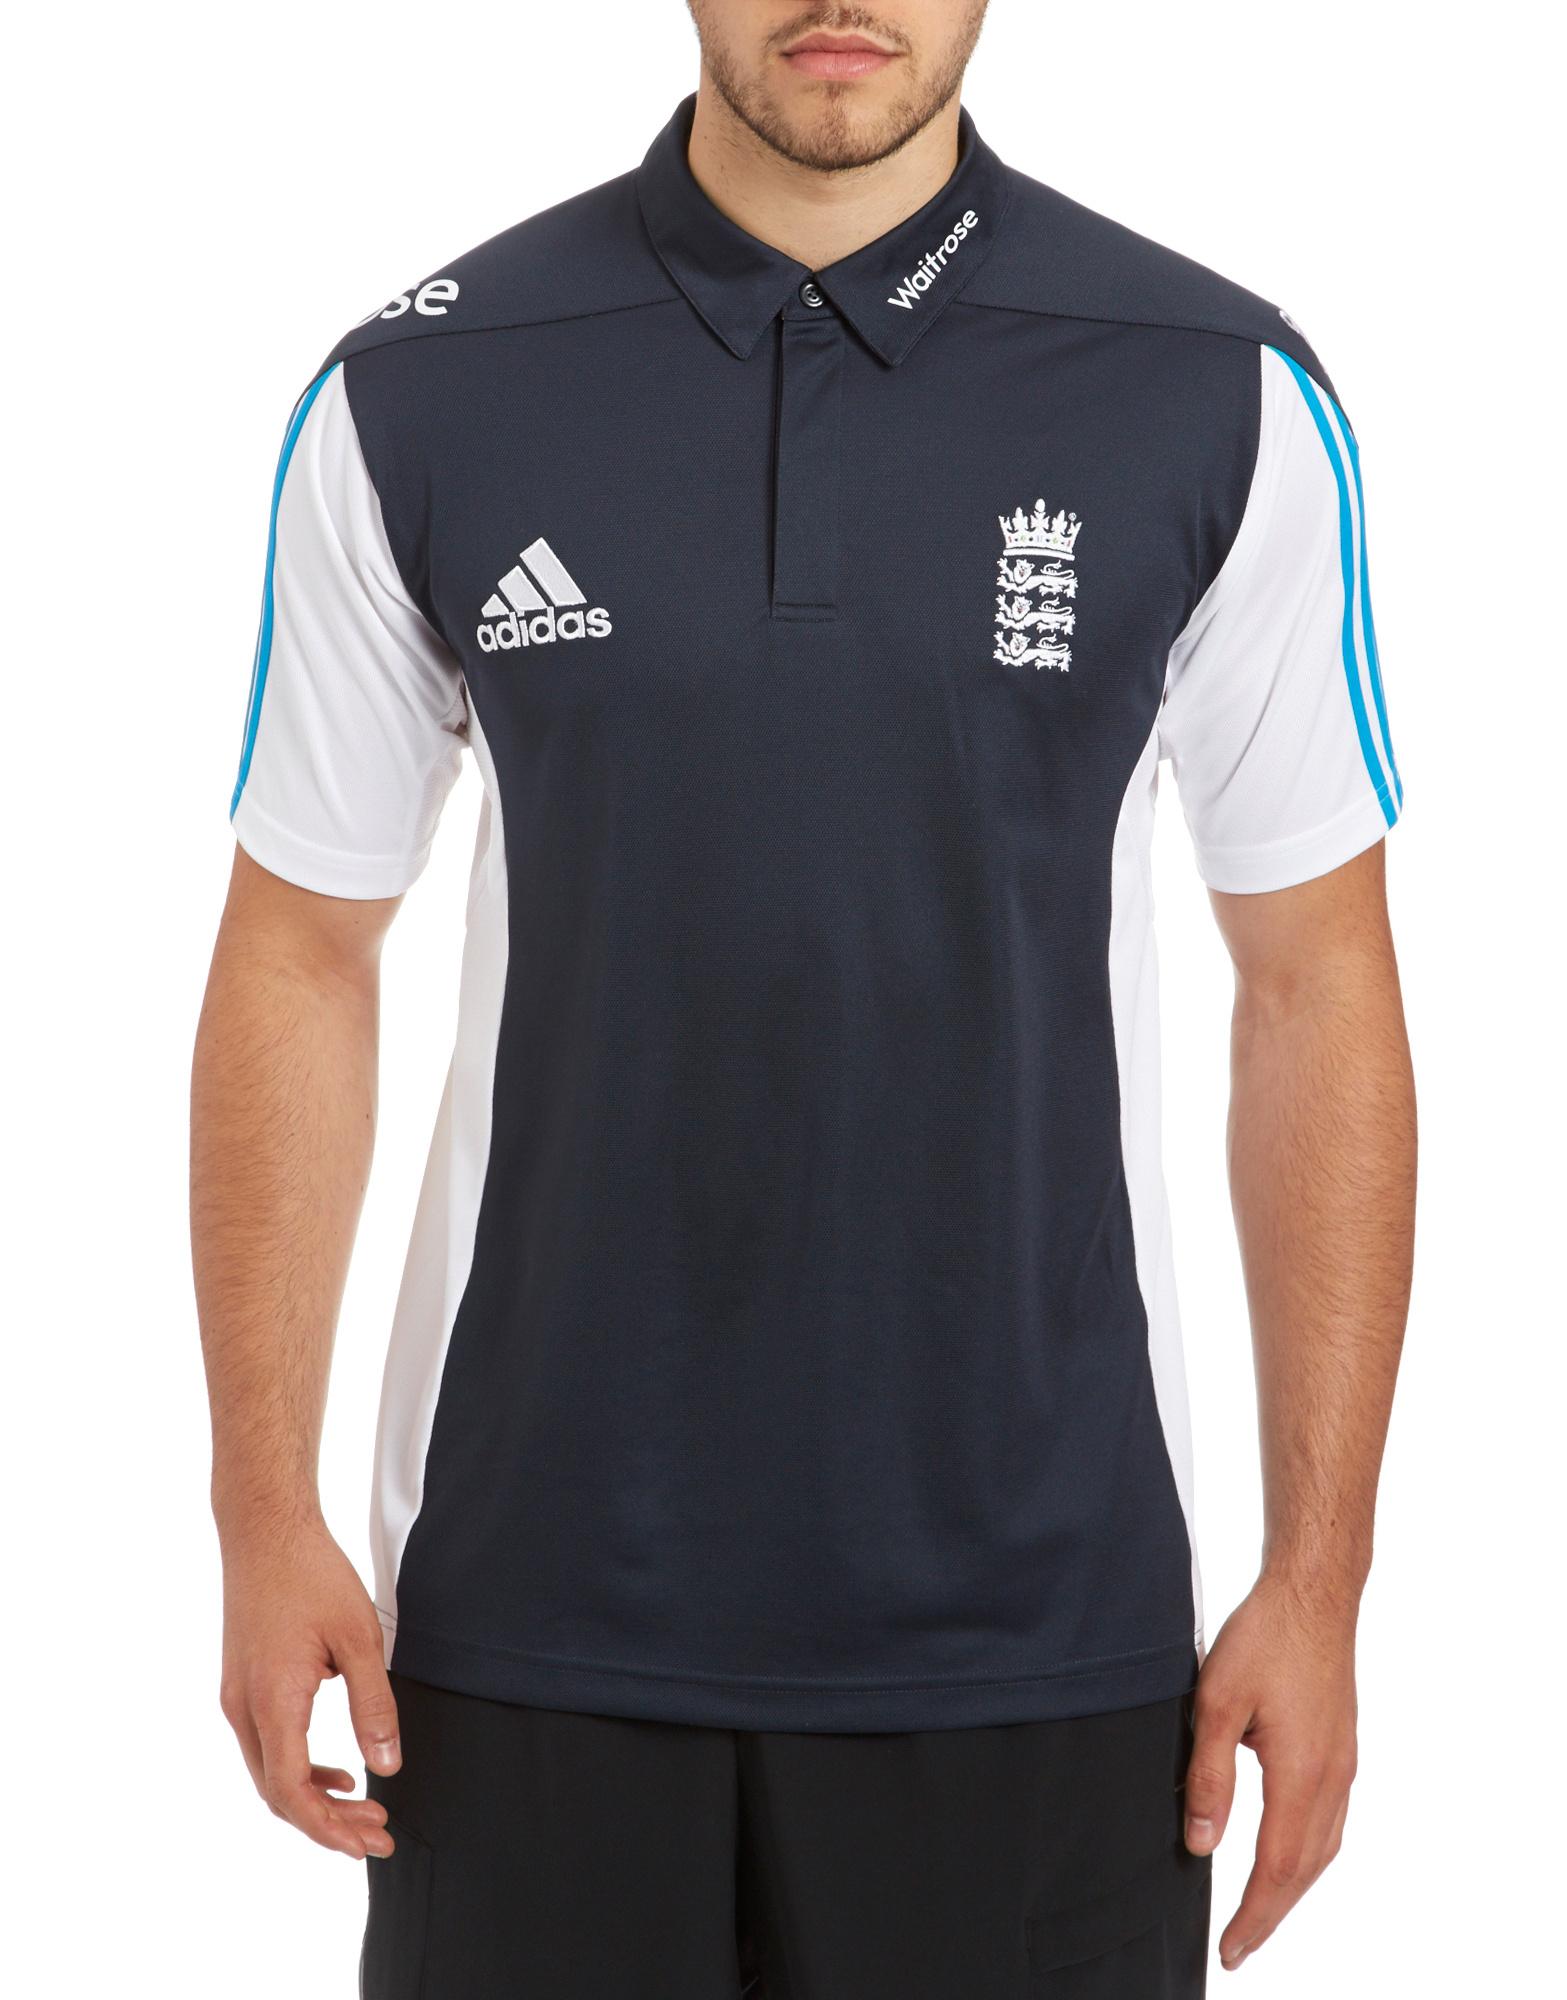 adidas 2015 england cricket replica training wind jacket